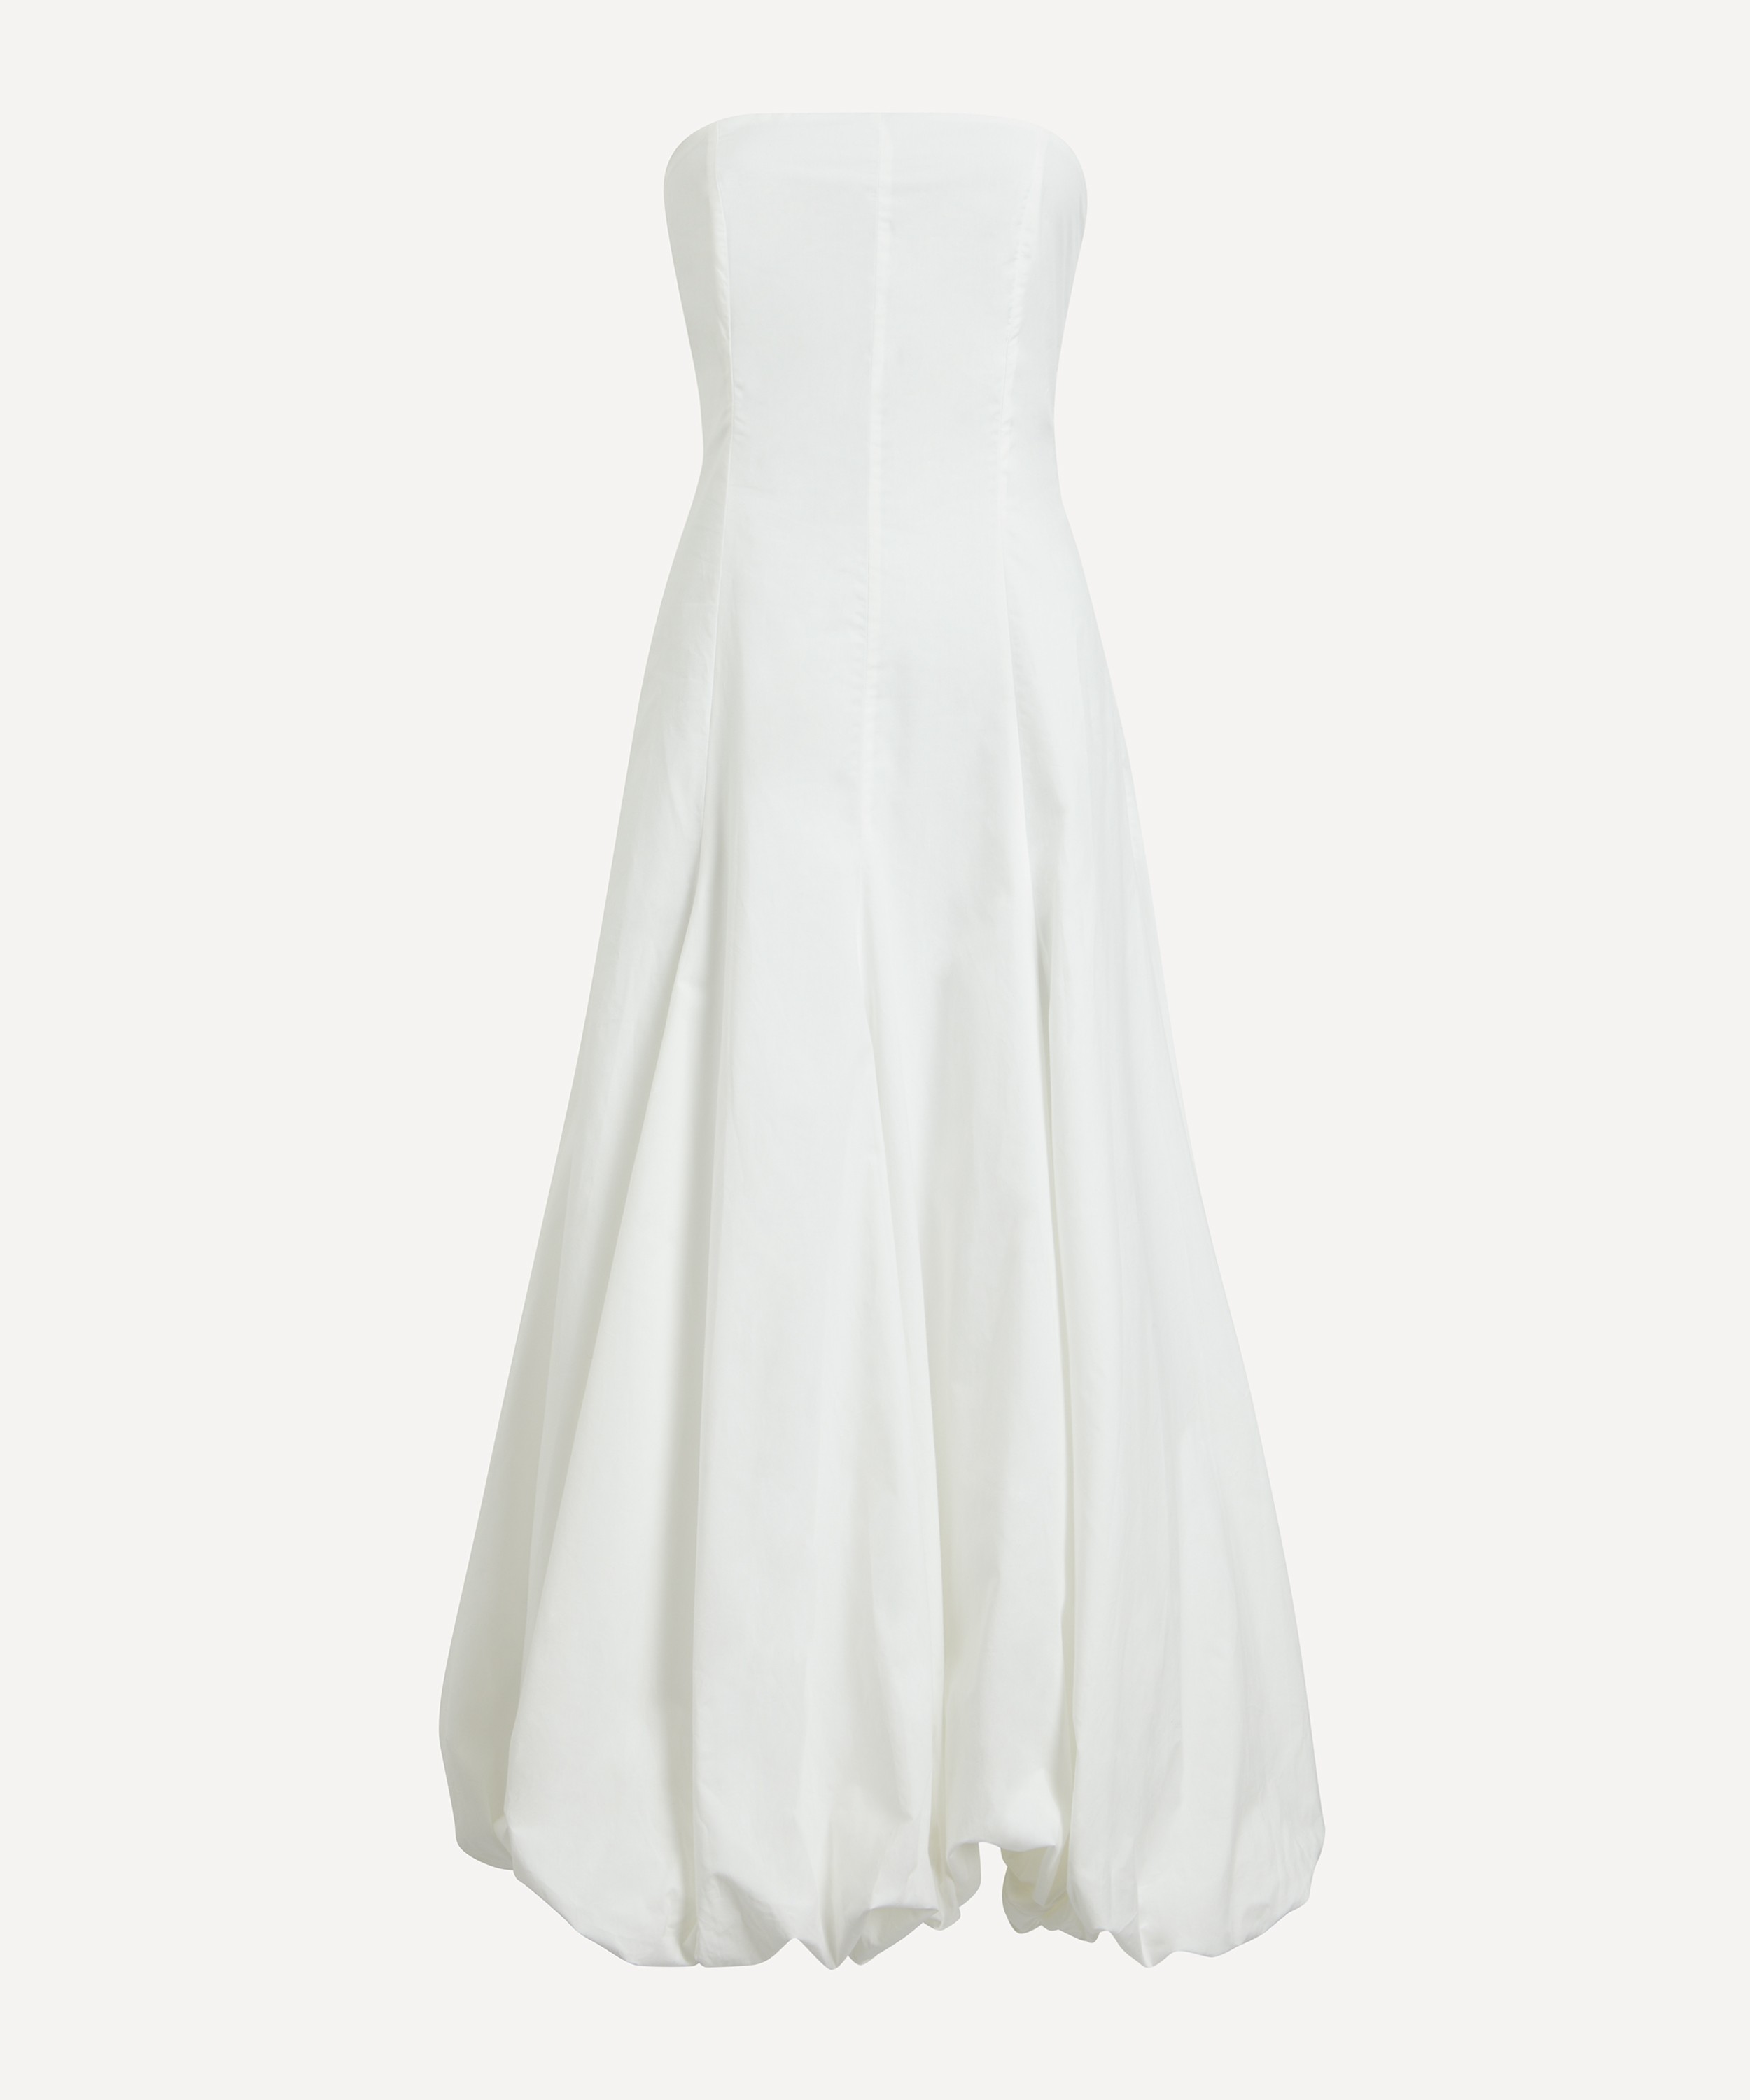 Paloma Wool - Globo Strapless Dress